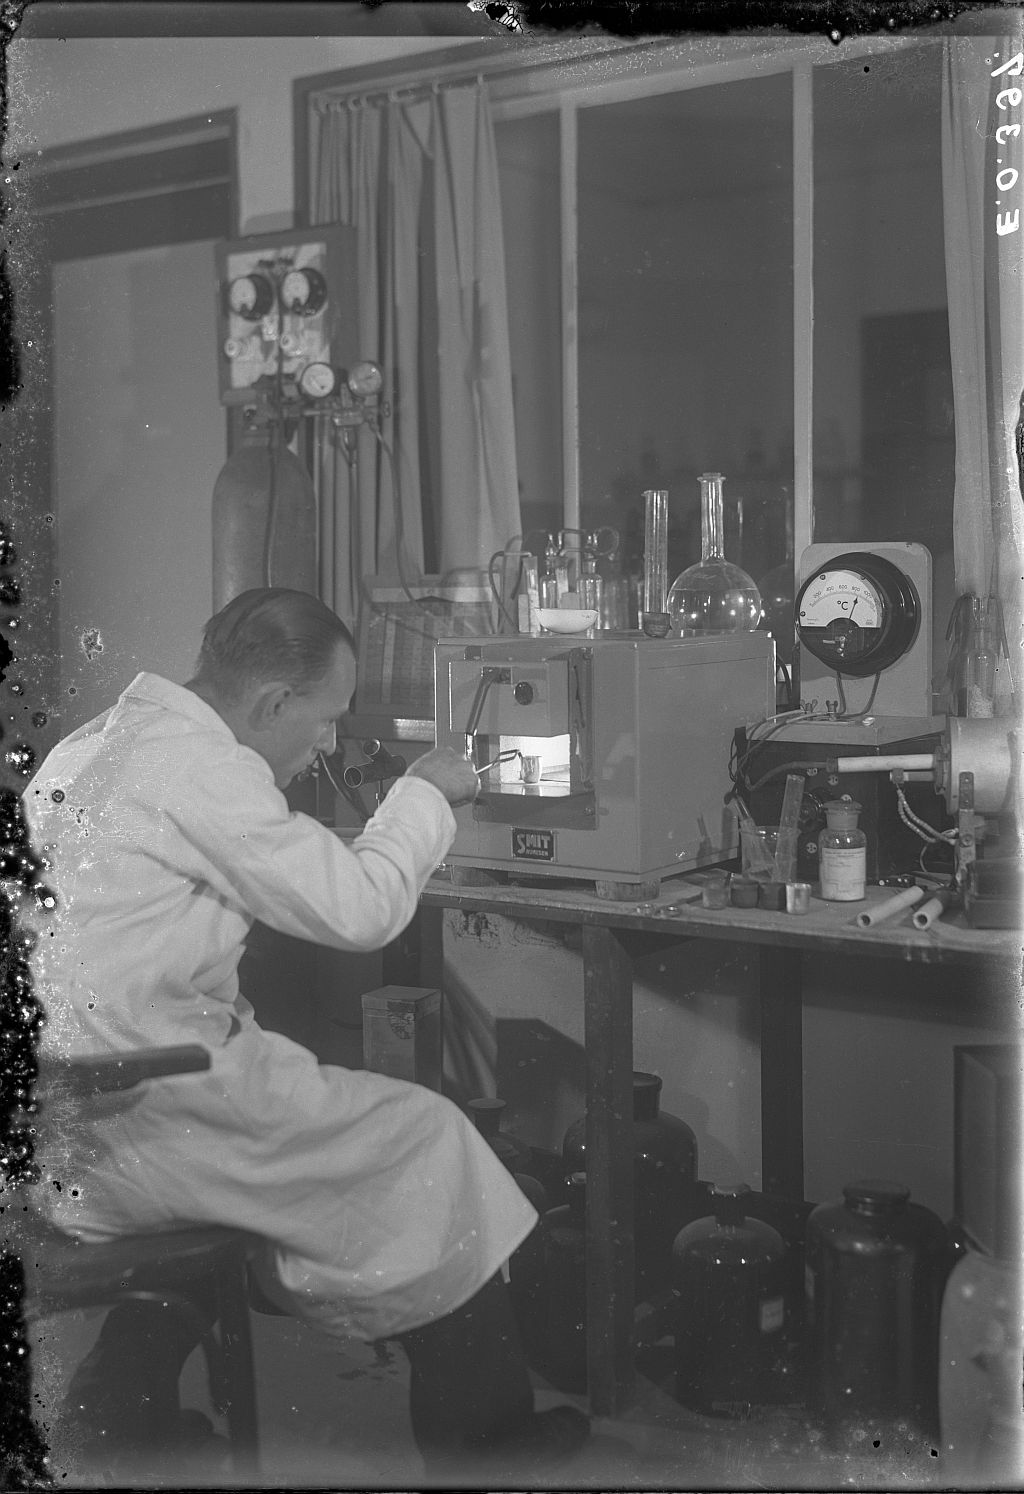 Laboratorium medewerker van Smit Ovens (1938/1940)